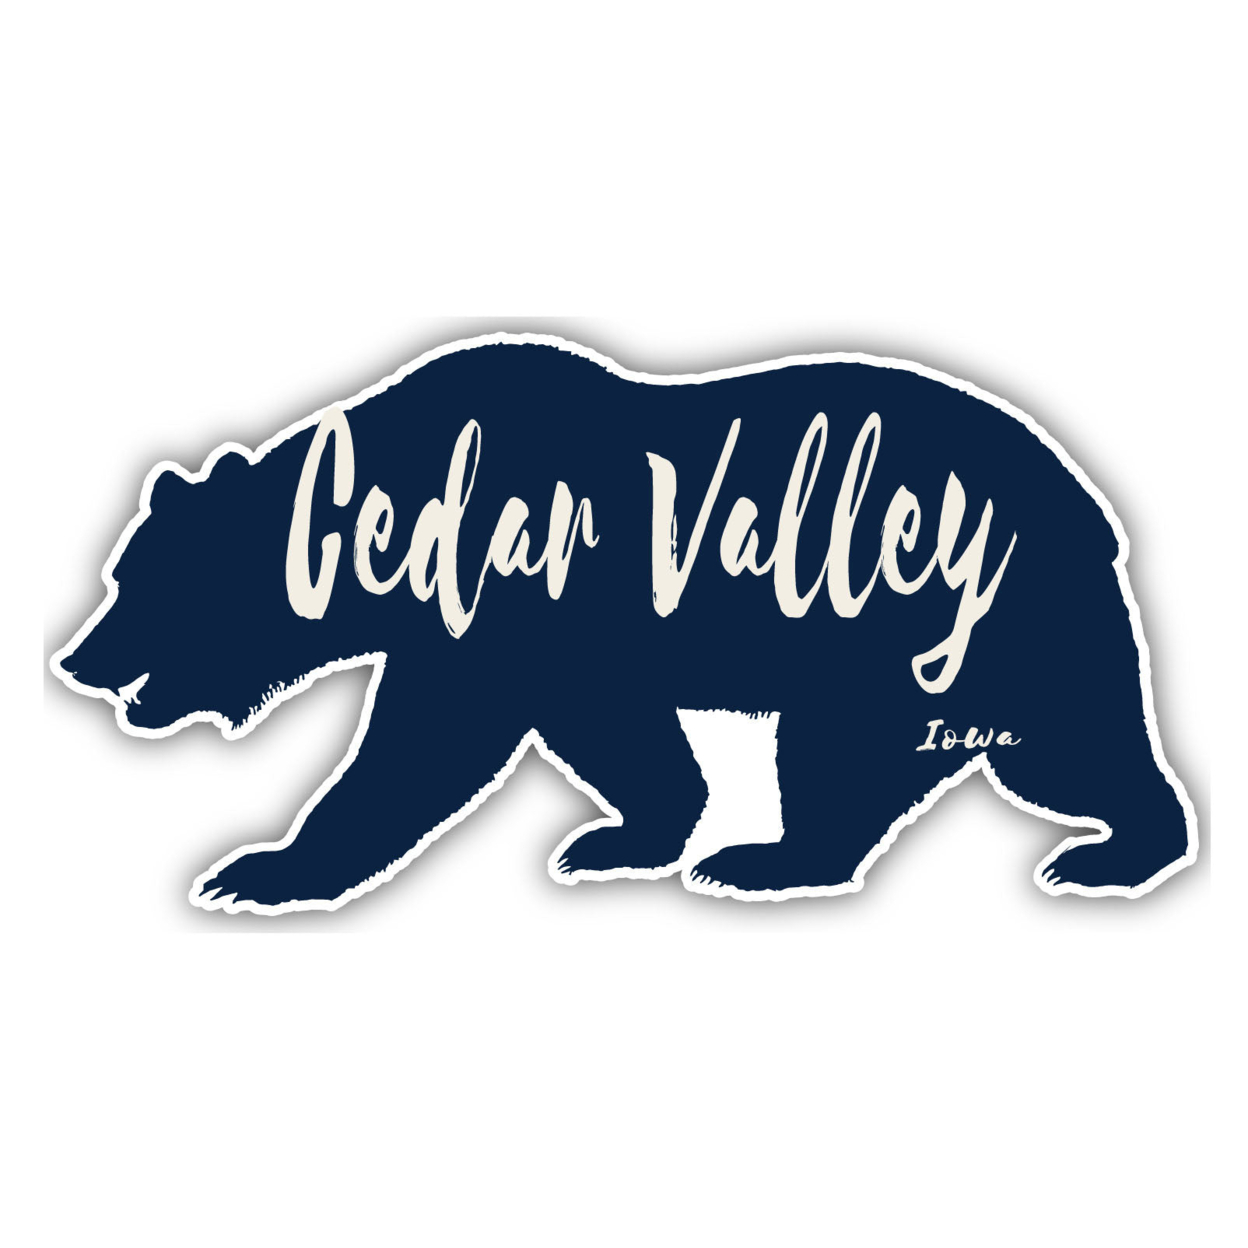 Cedar Valley Iowa Souvenir Decorative Stickers (Choose Theme And Size) - 4-Pack, 4-Inch, Bear